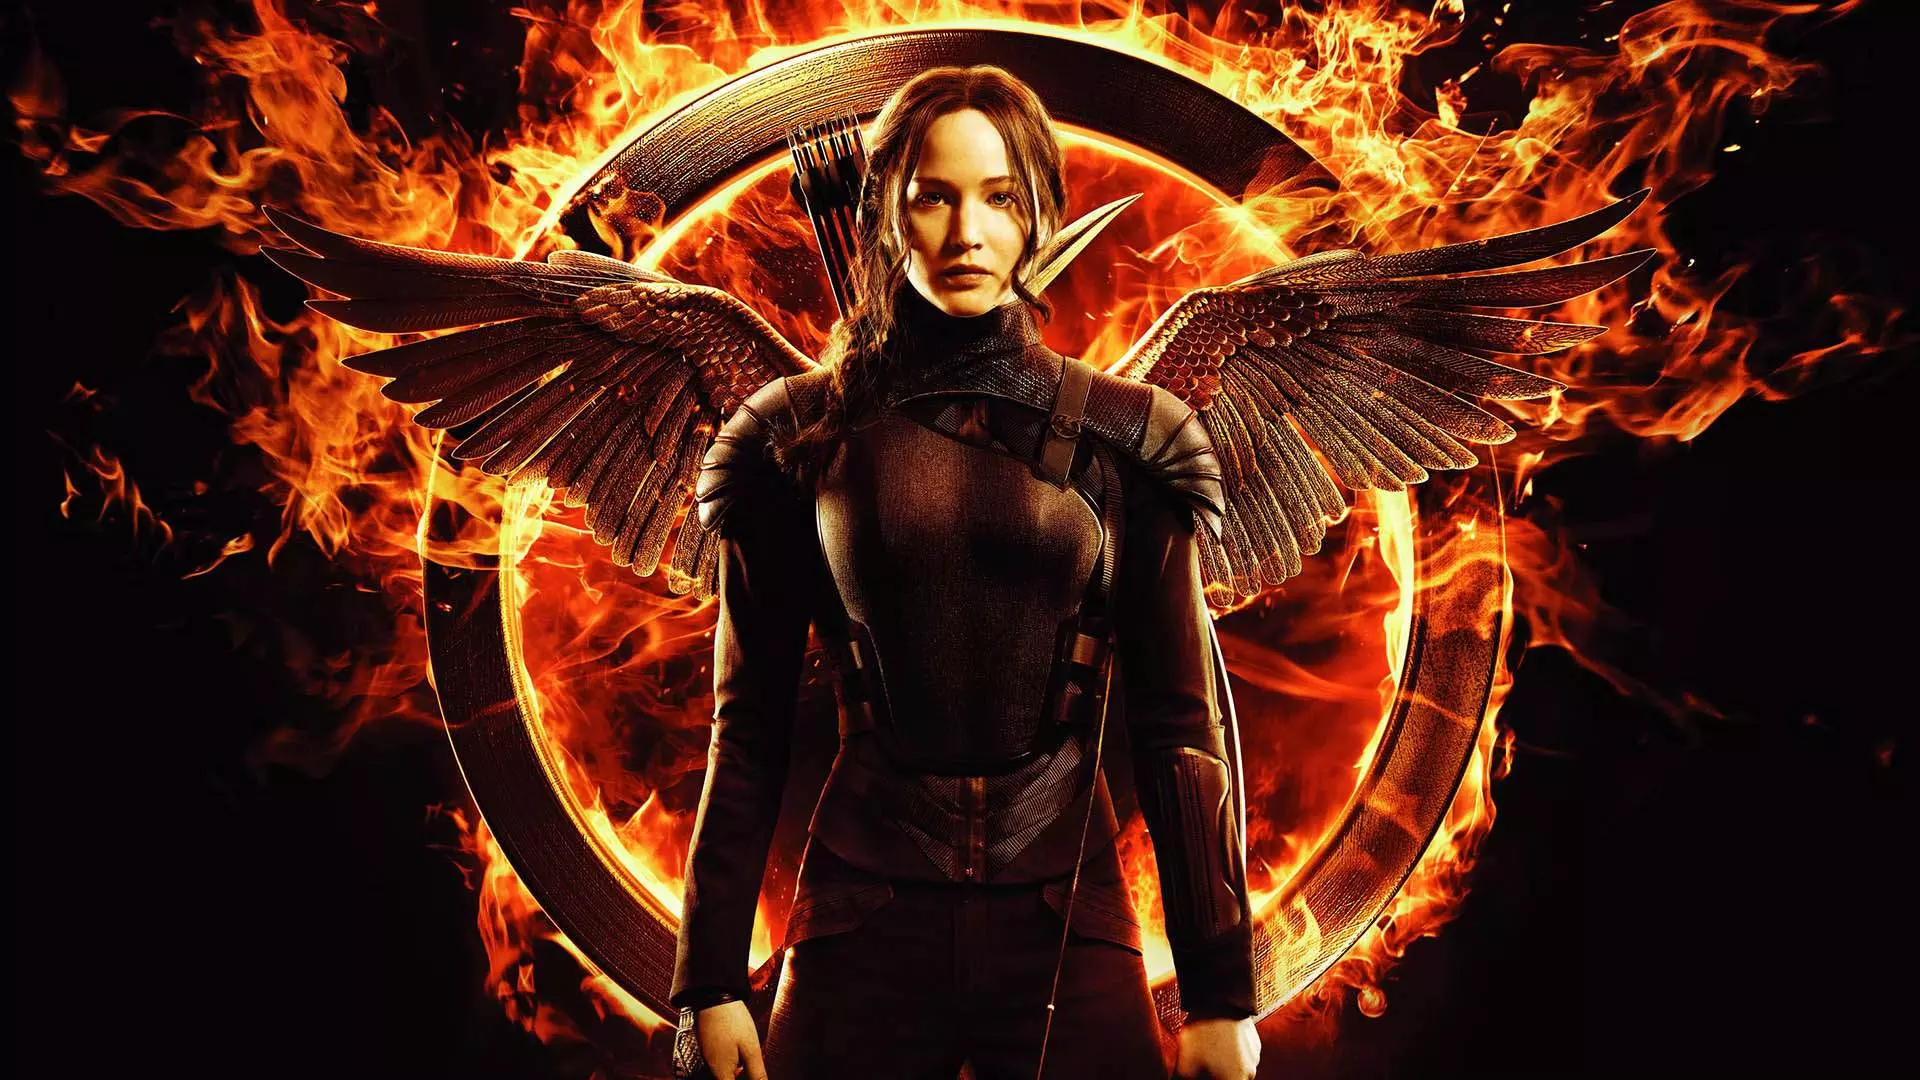 کاور فیلم the Hunger Games با حضور جنیفر لاورنس